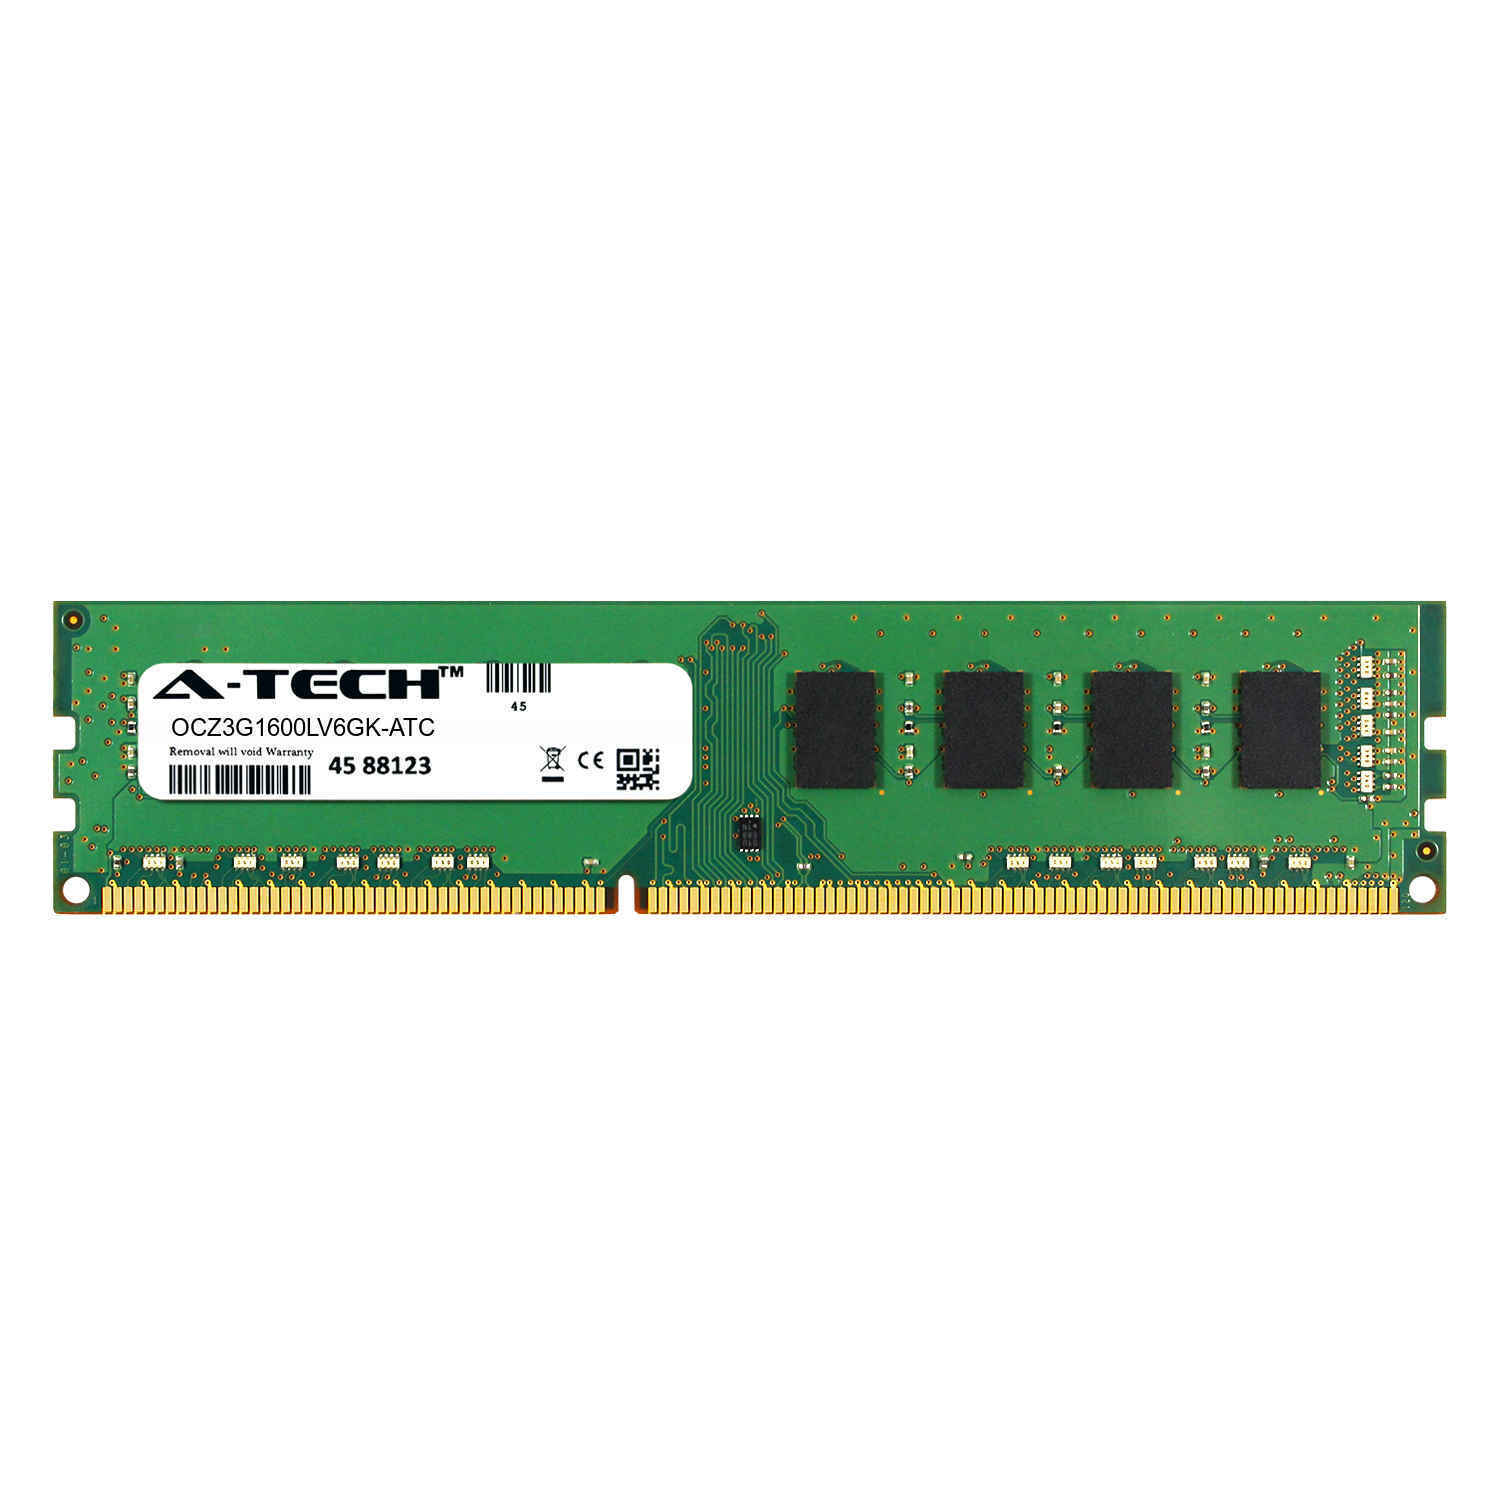 2GB DDR3 PC3-12800 1600MHz DIMM (OCZ OCZ3G1600LV6GK Equivalent) Memory RAM